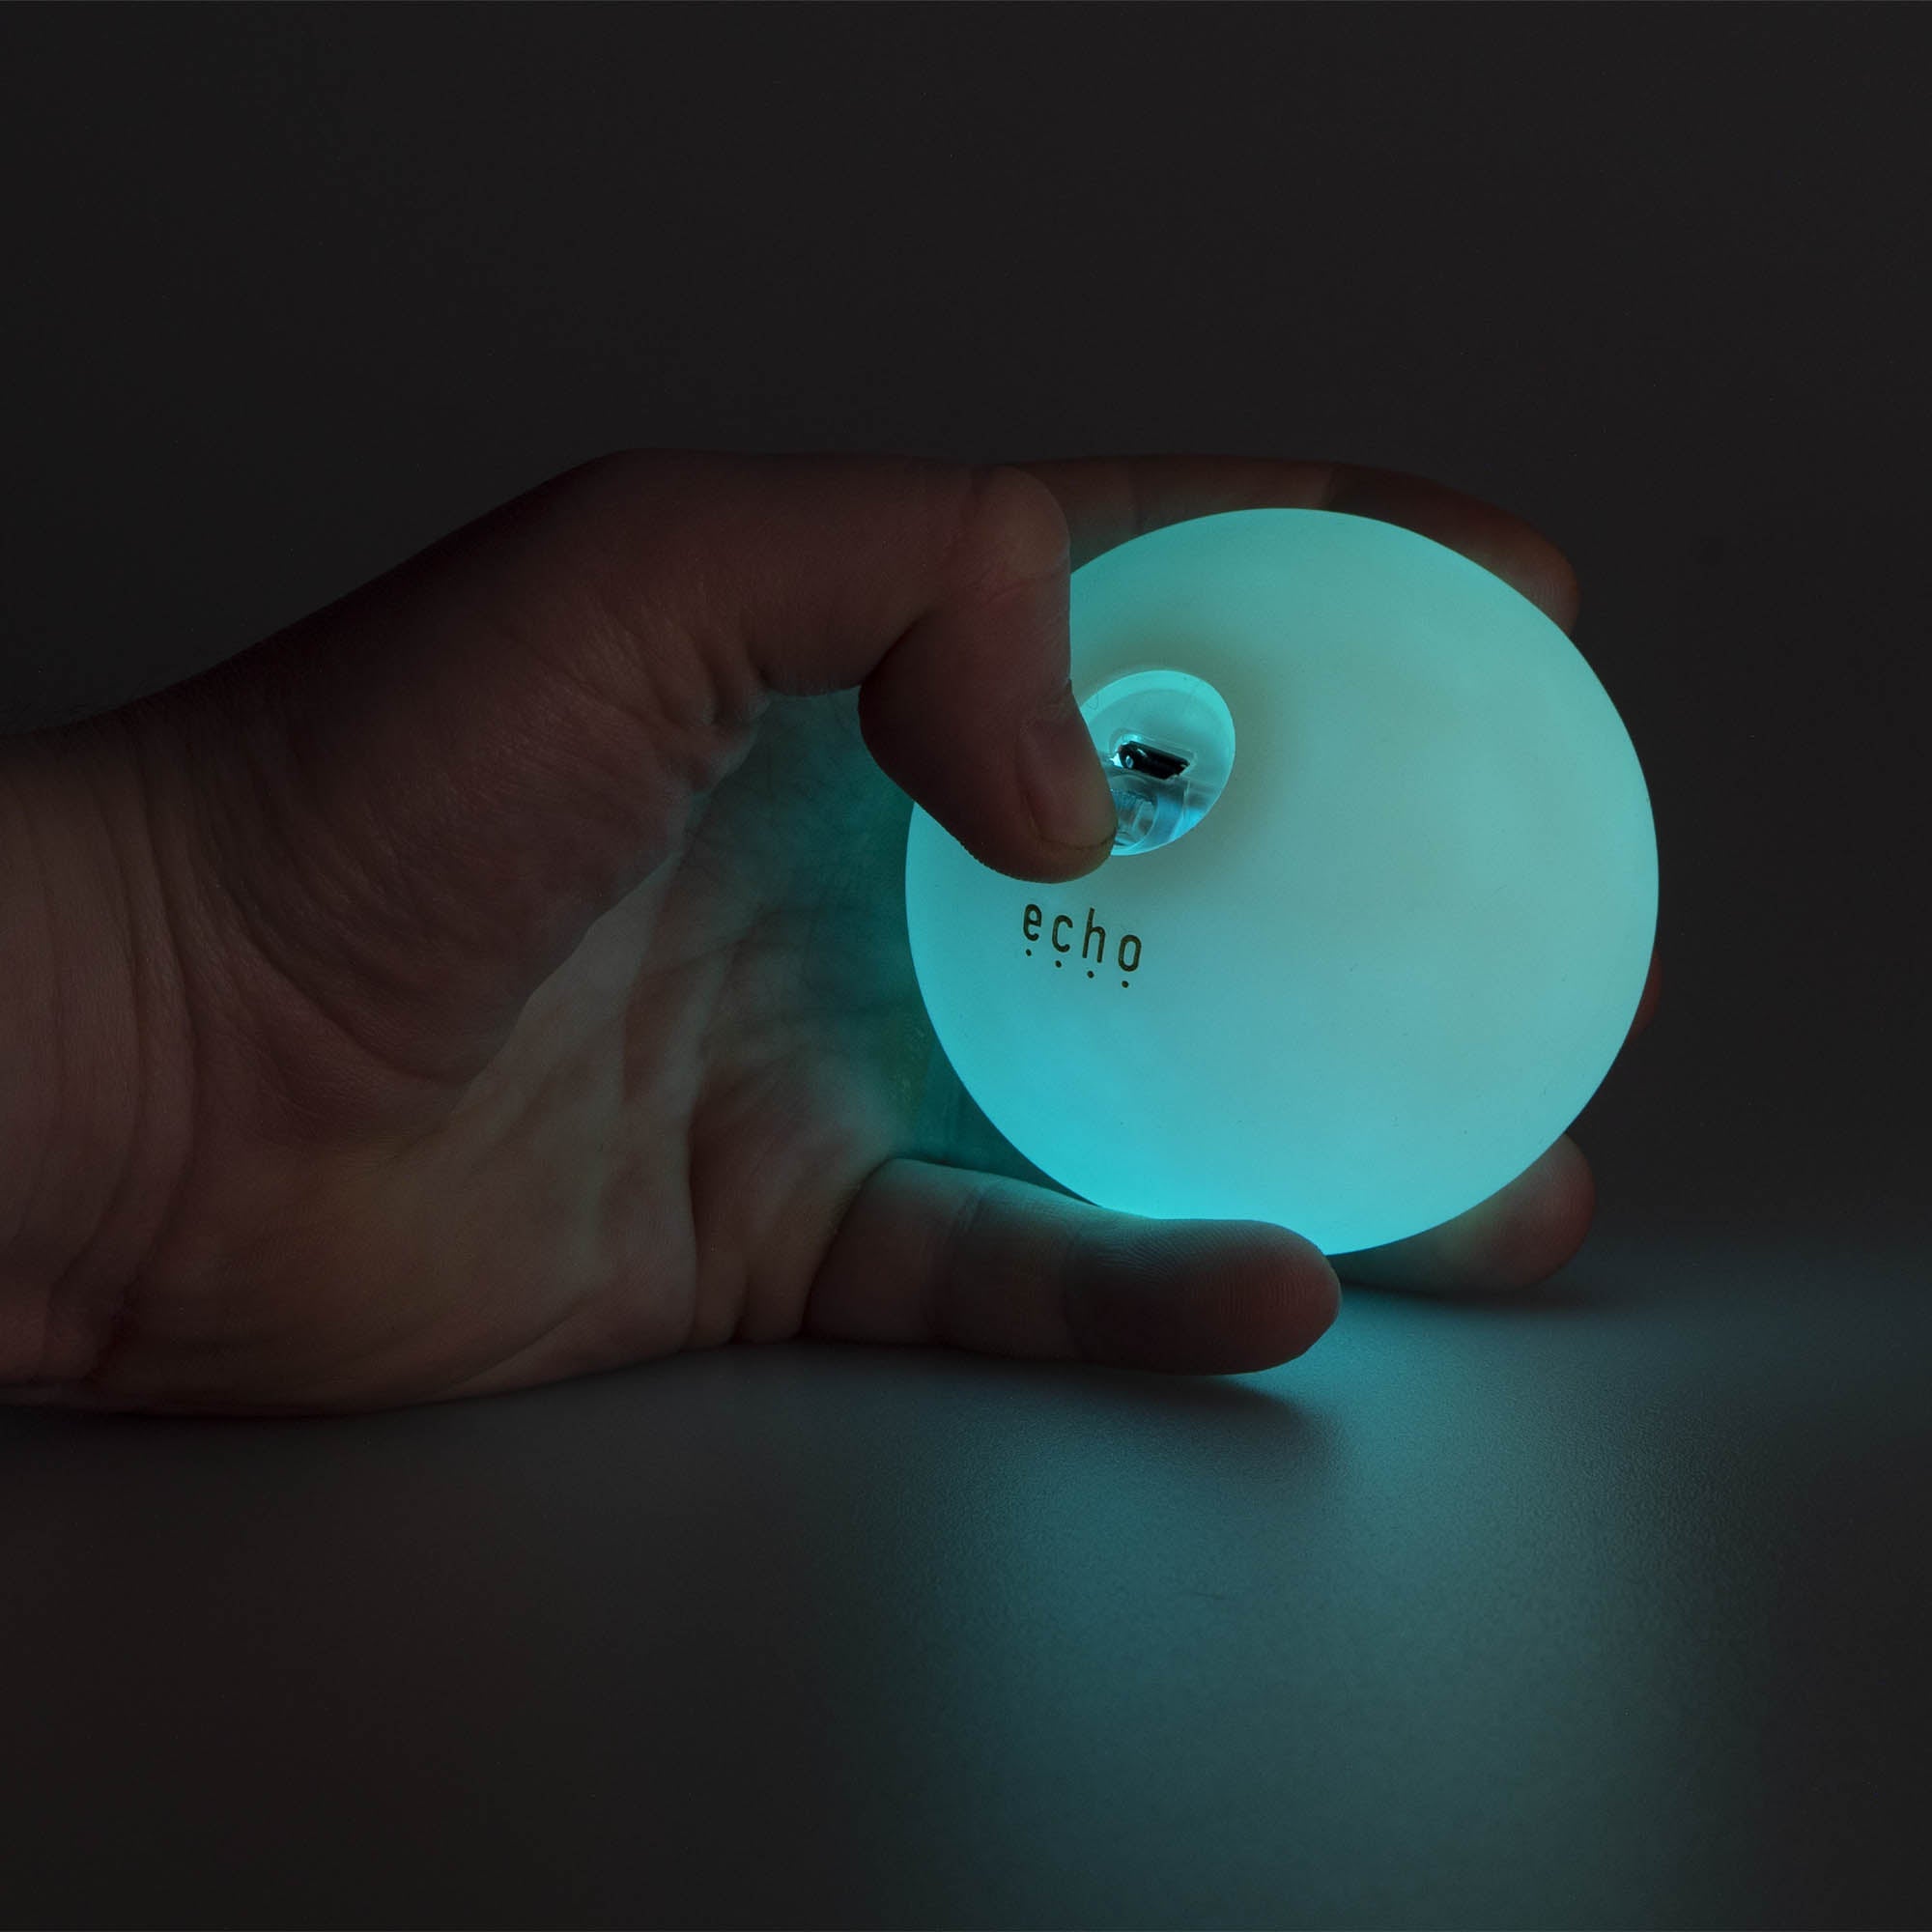 Echo glow juggling ball glowing in hand finger pressing switch 